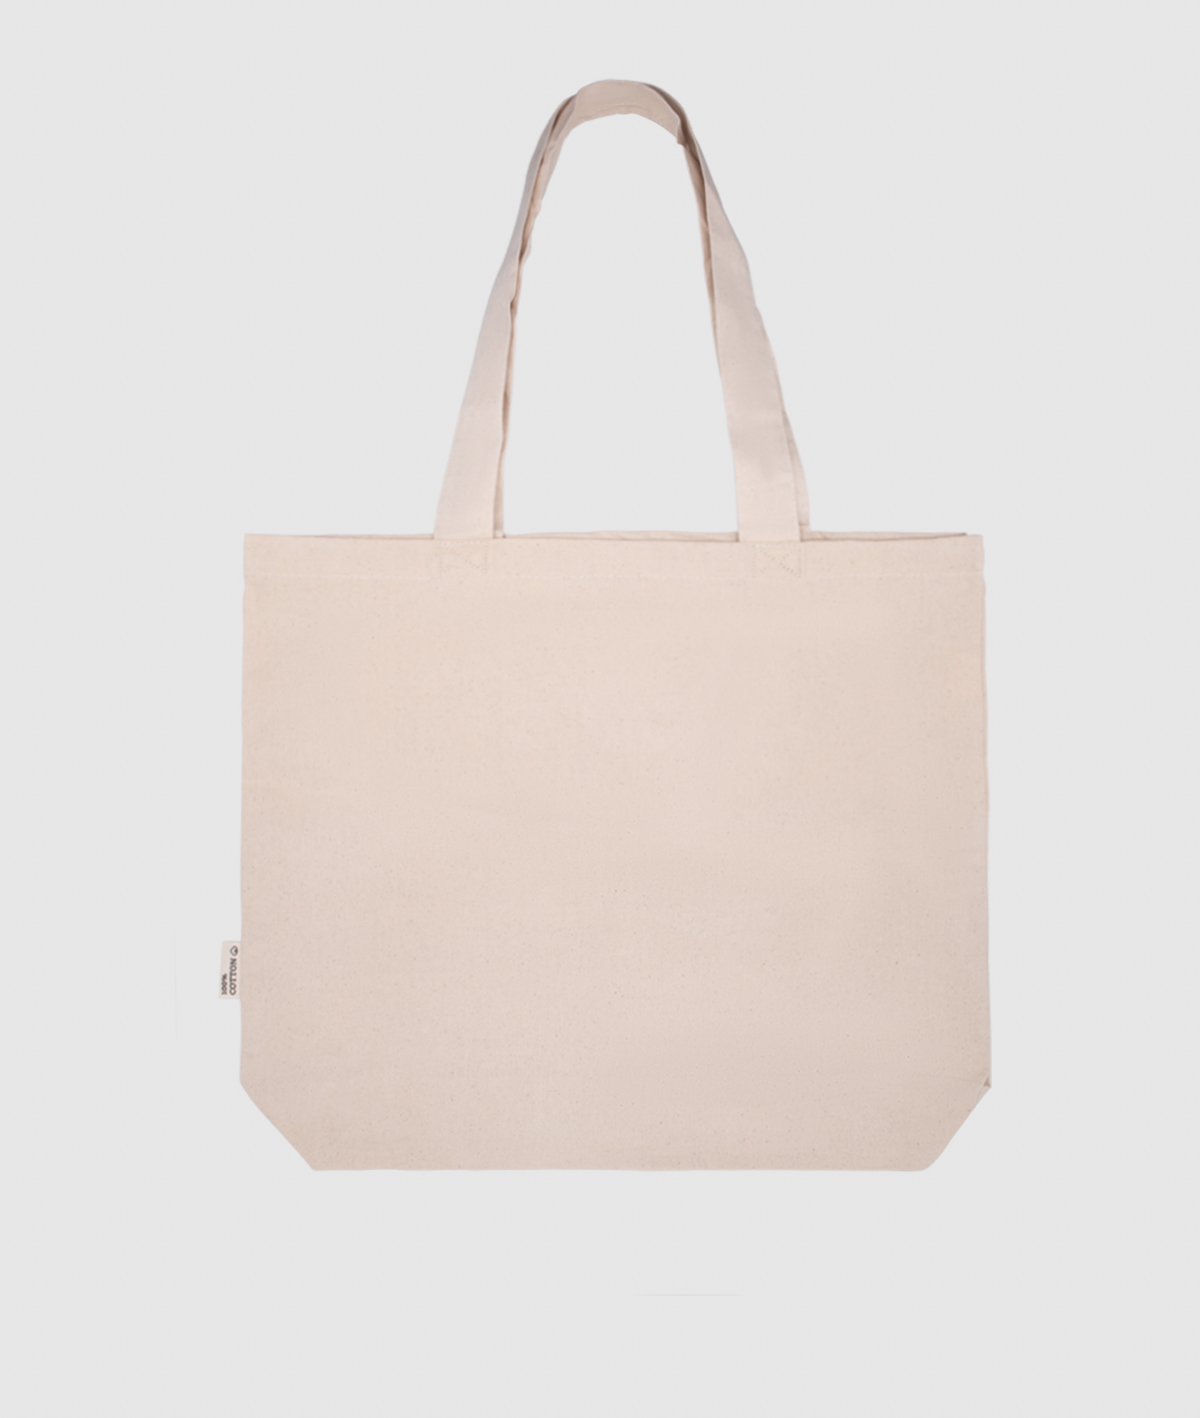 Segovia & Madrid IEU Bag - Limited Edition. natural colour back